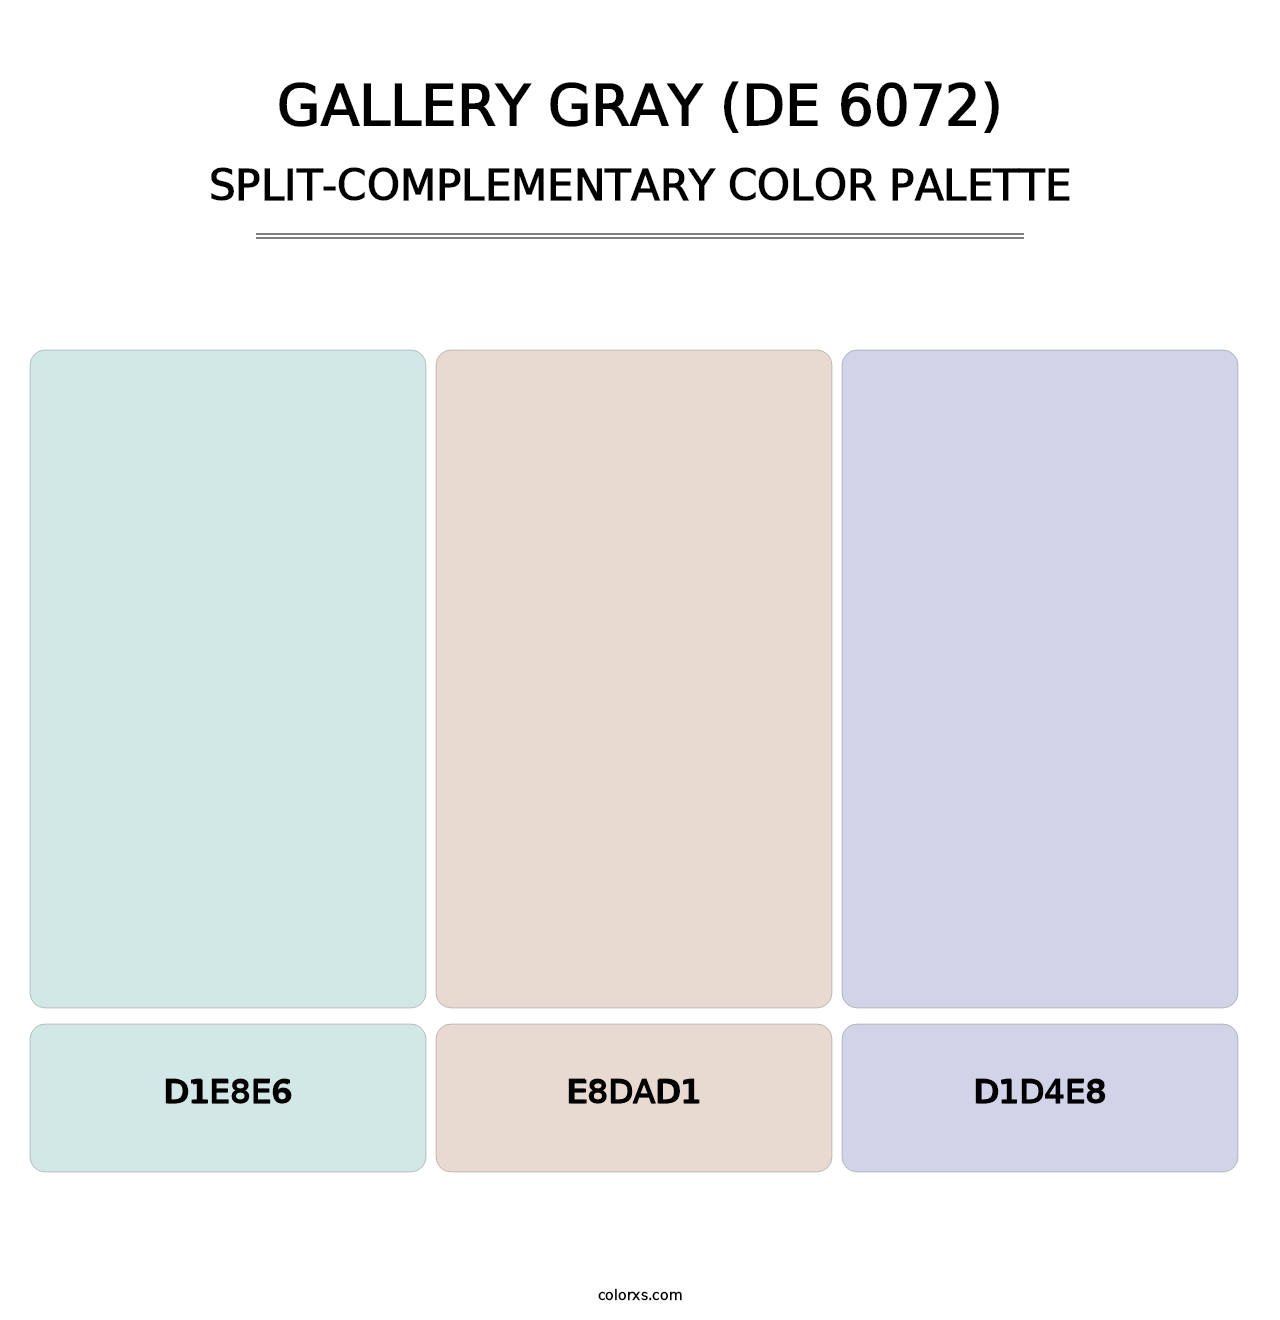 Gallery Gray (DE 6072) - Split-Complementary Color Palette